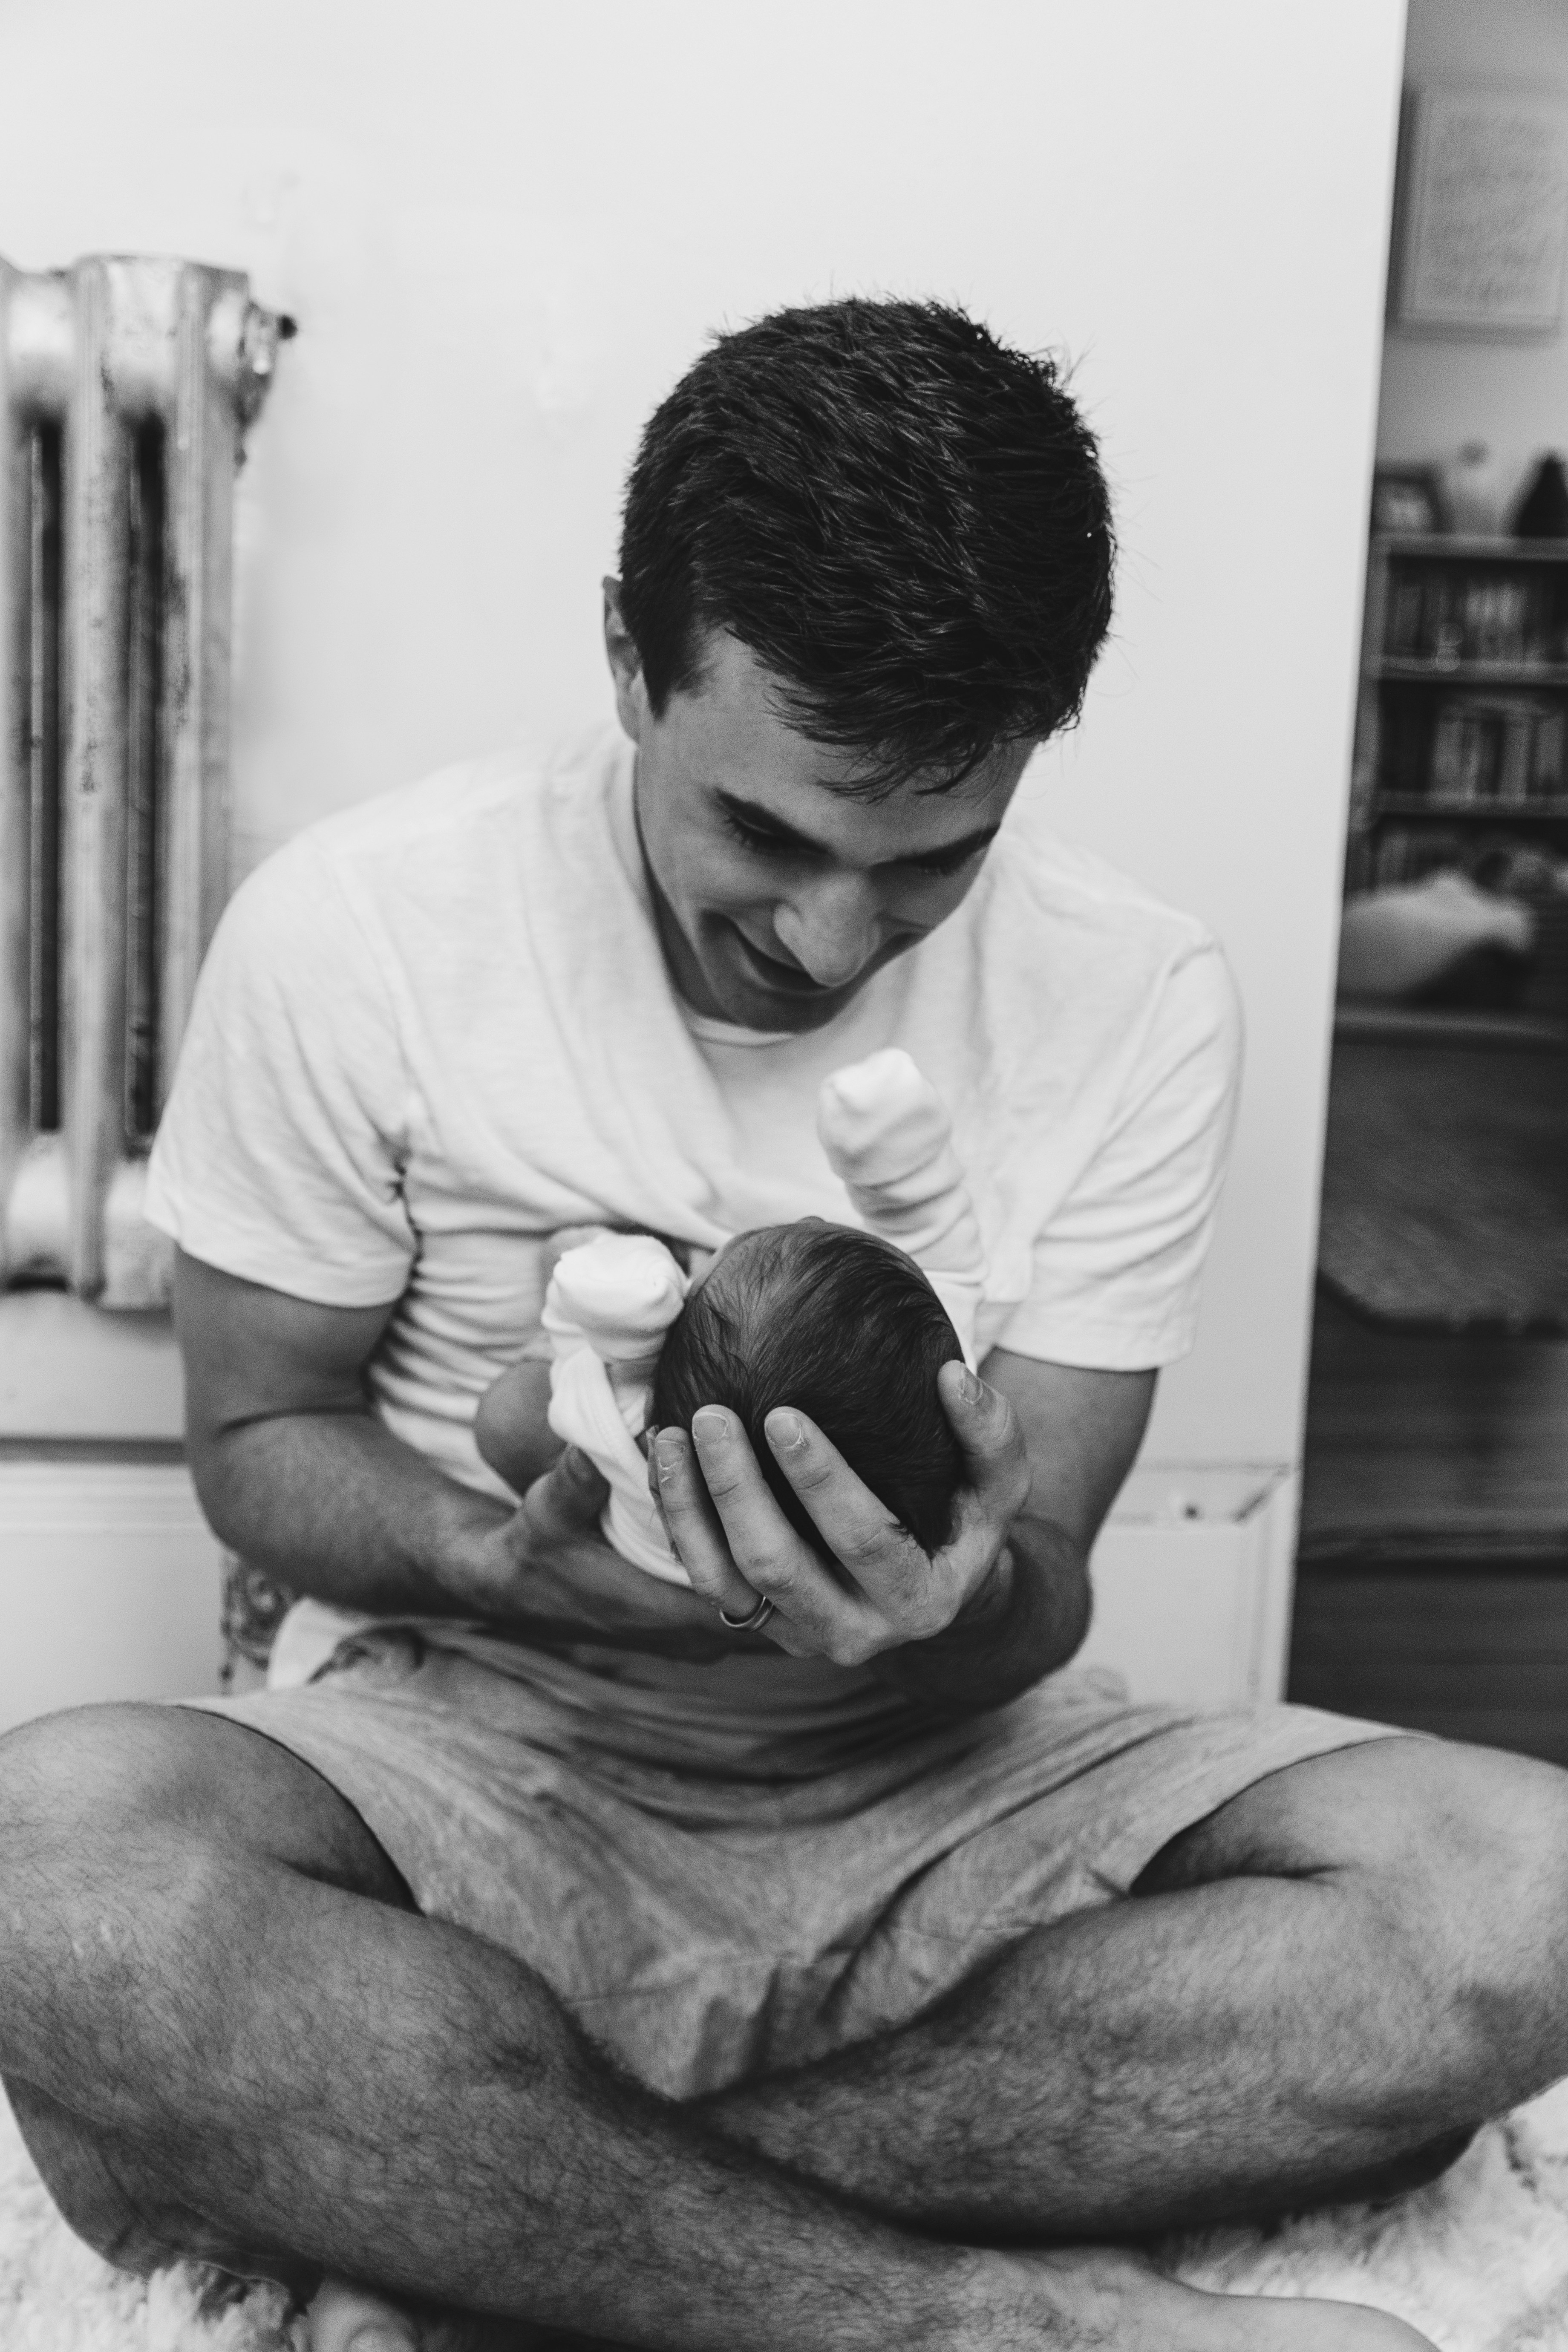 A man holding a baby | Source: Unsplash